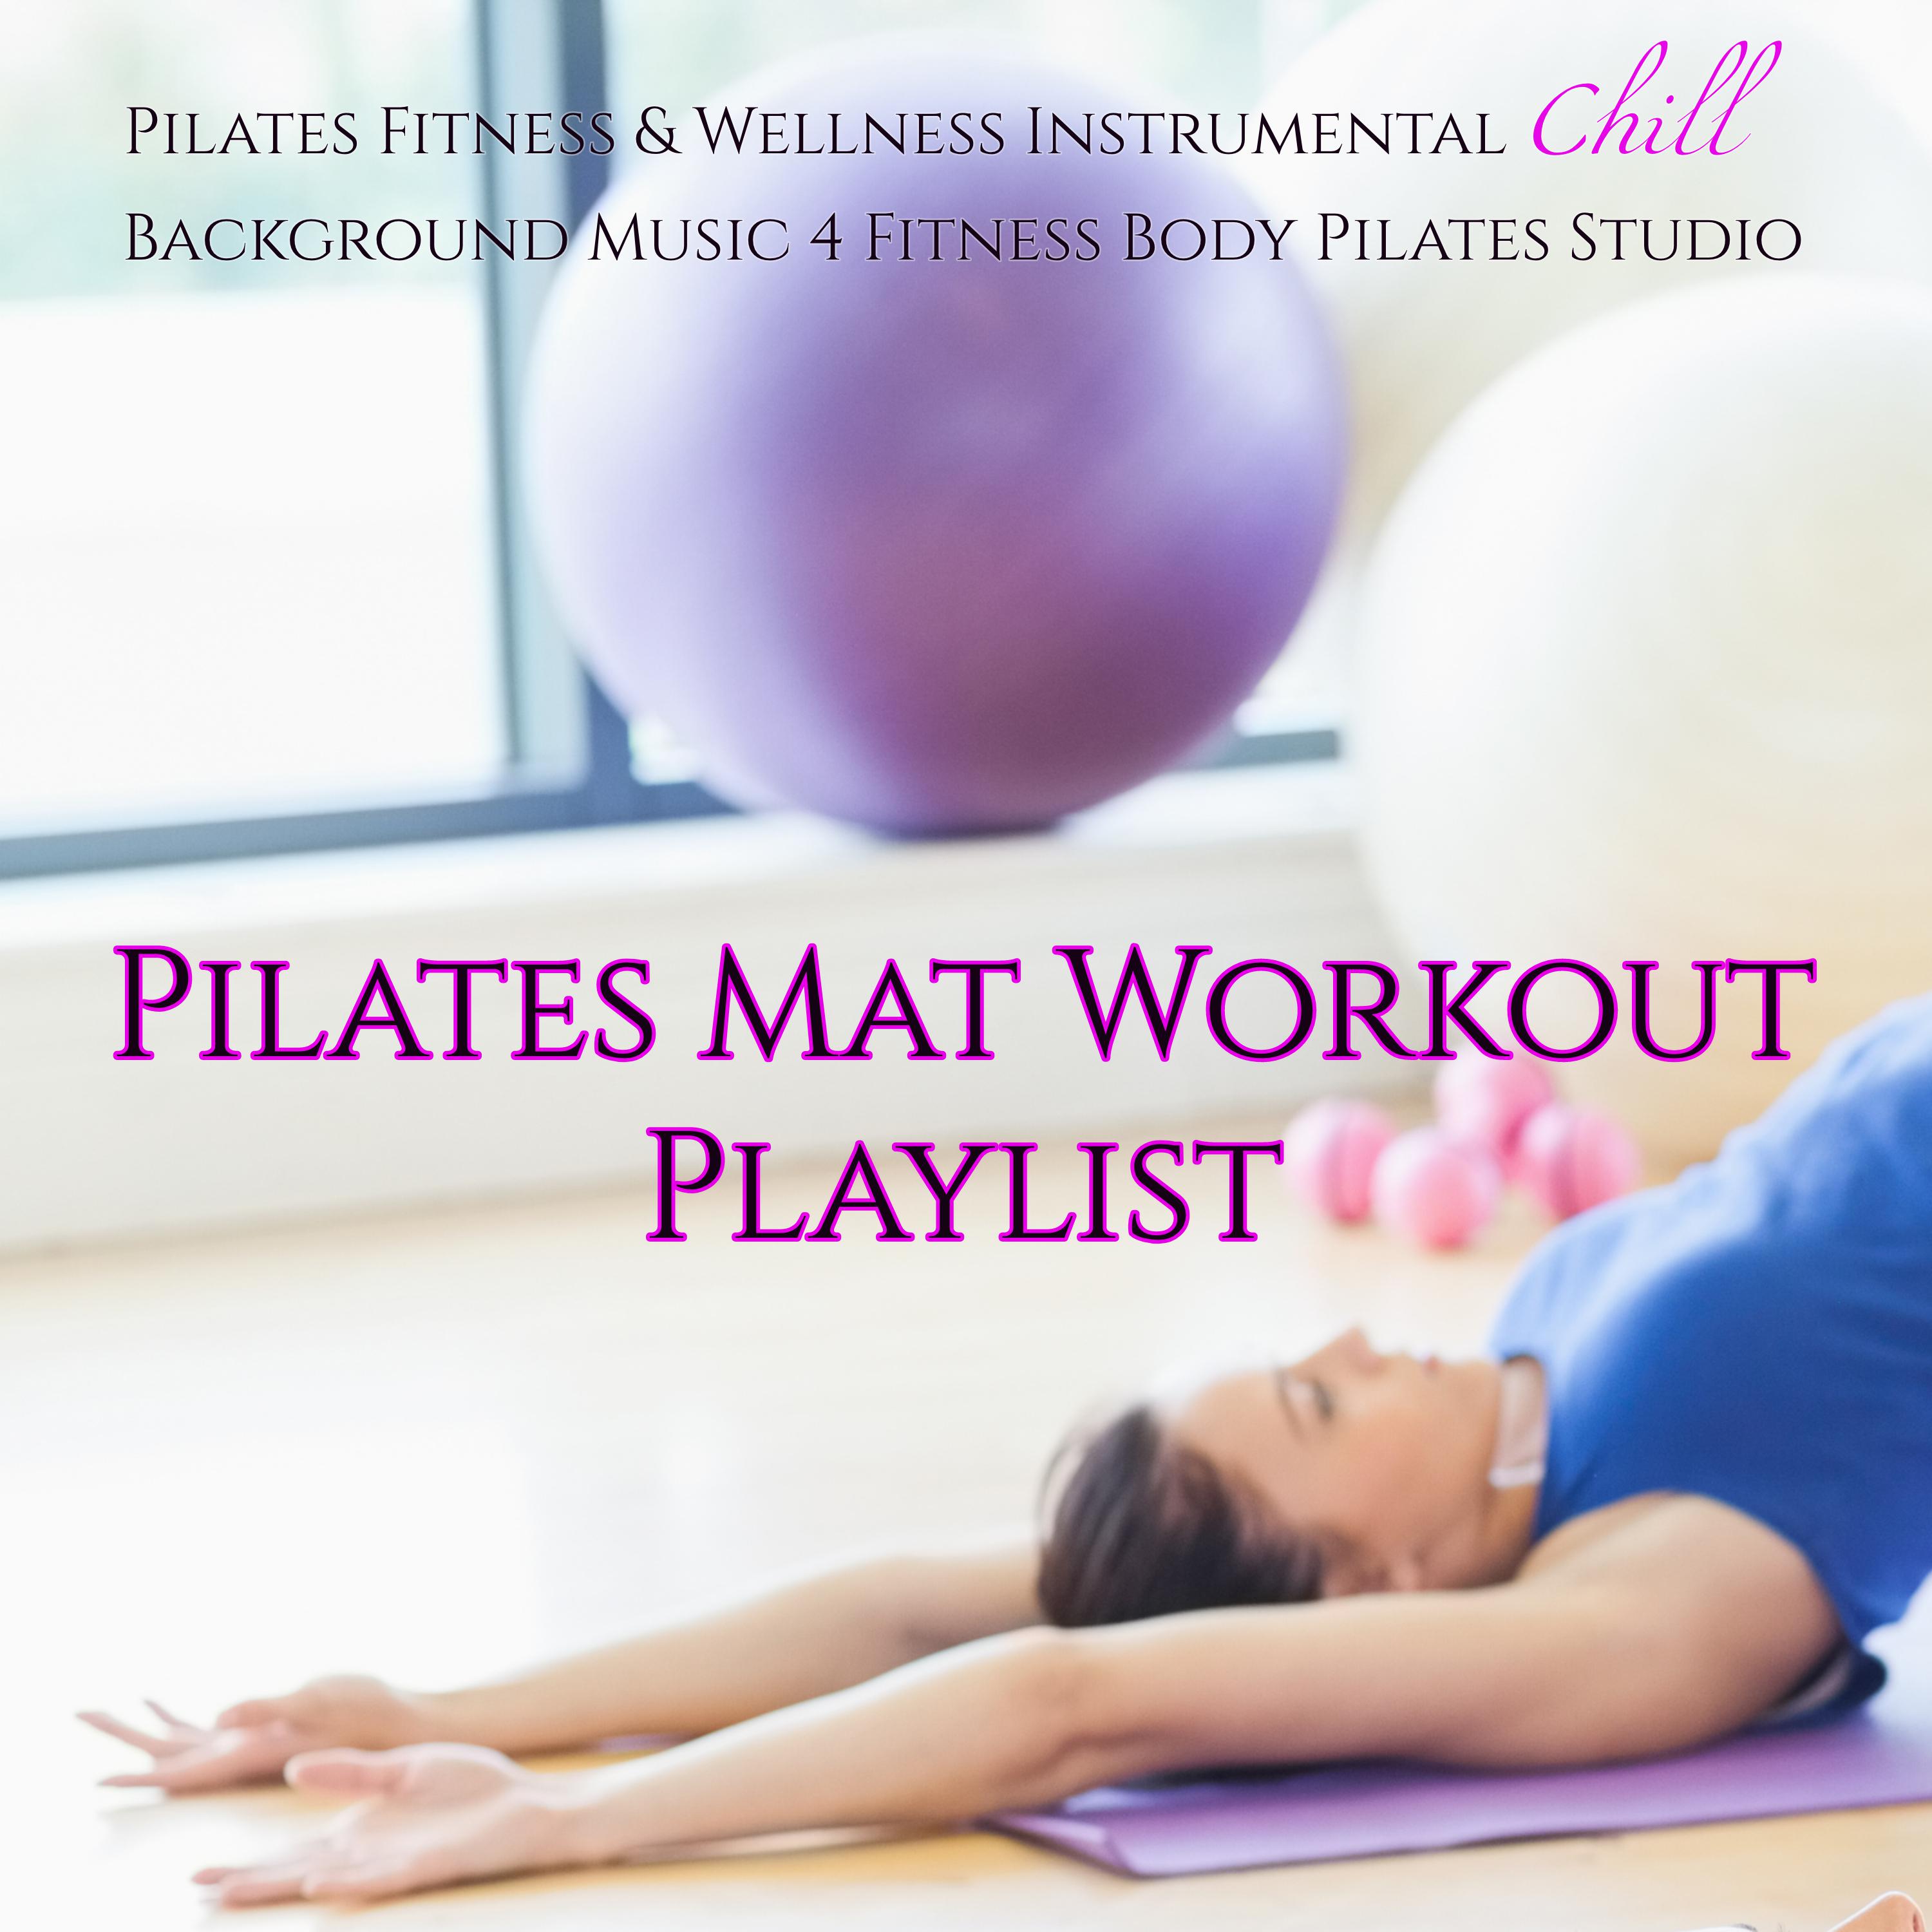 Pilates Mat Workout Playlist – Pilates Fitness & Wellness Instrumental Chill Background Music 4 Fitness Body Pilates Studio